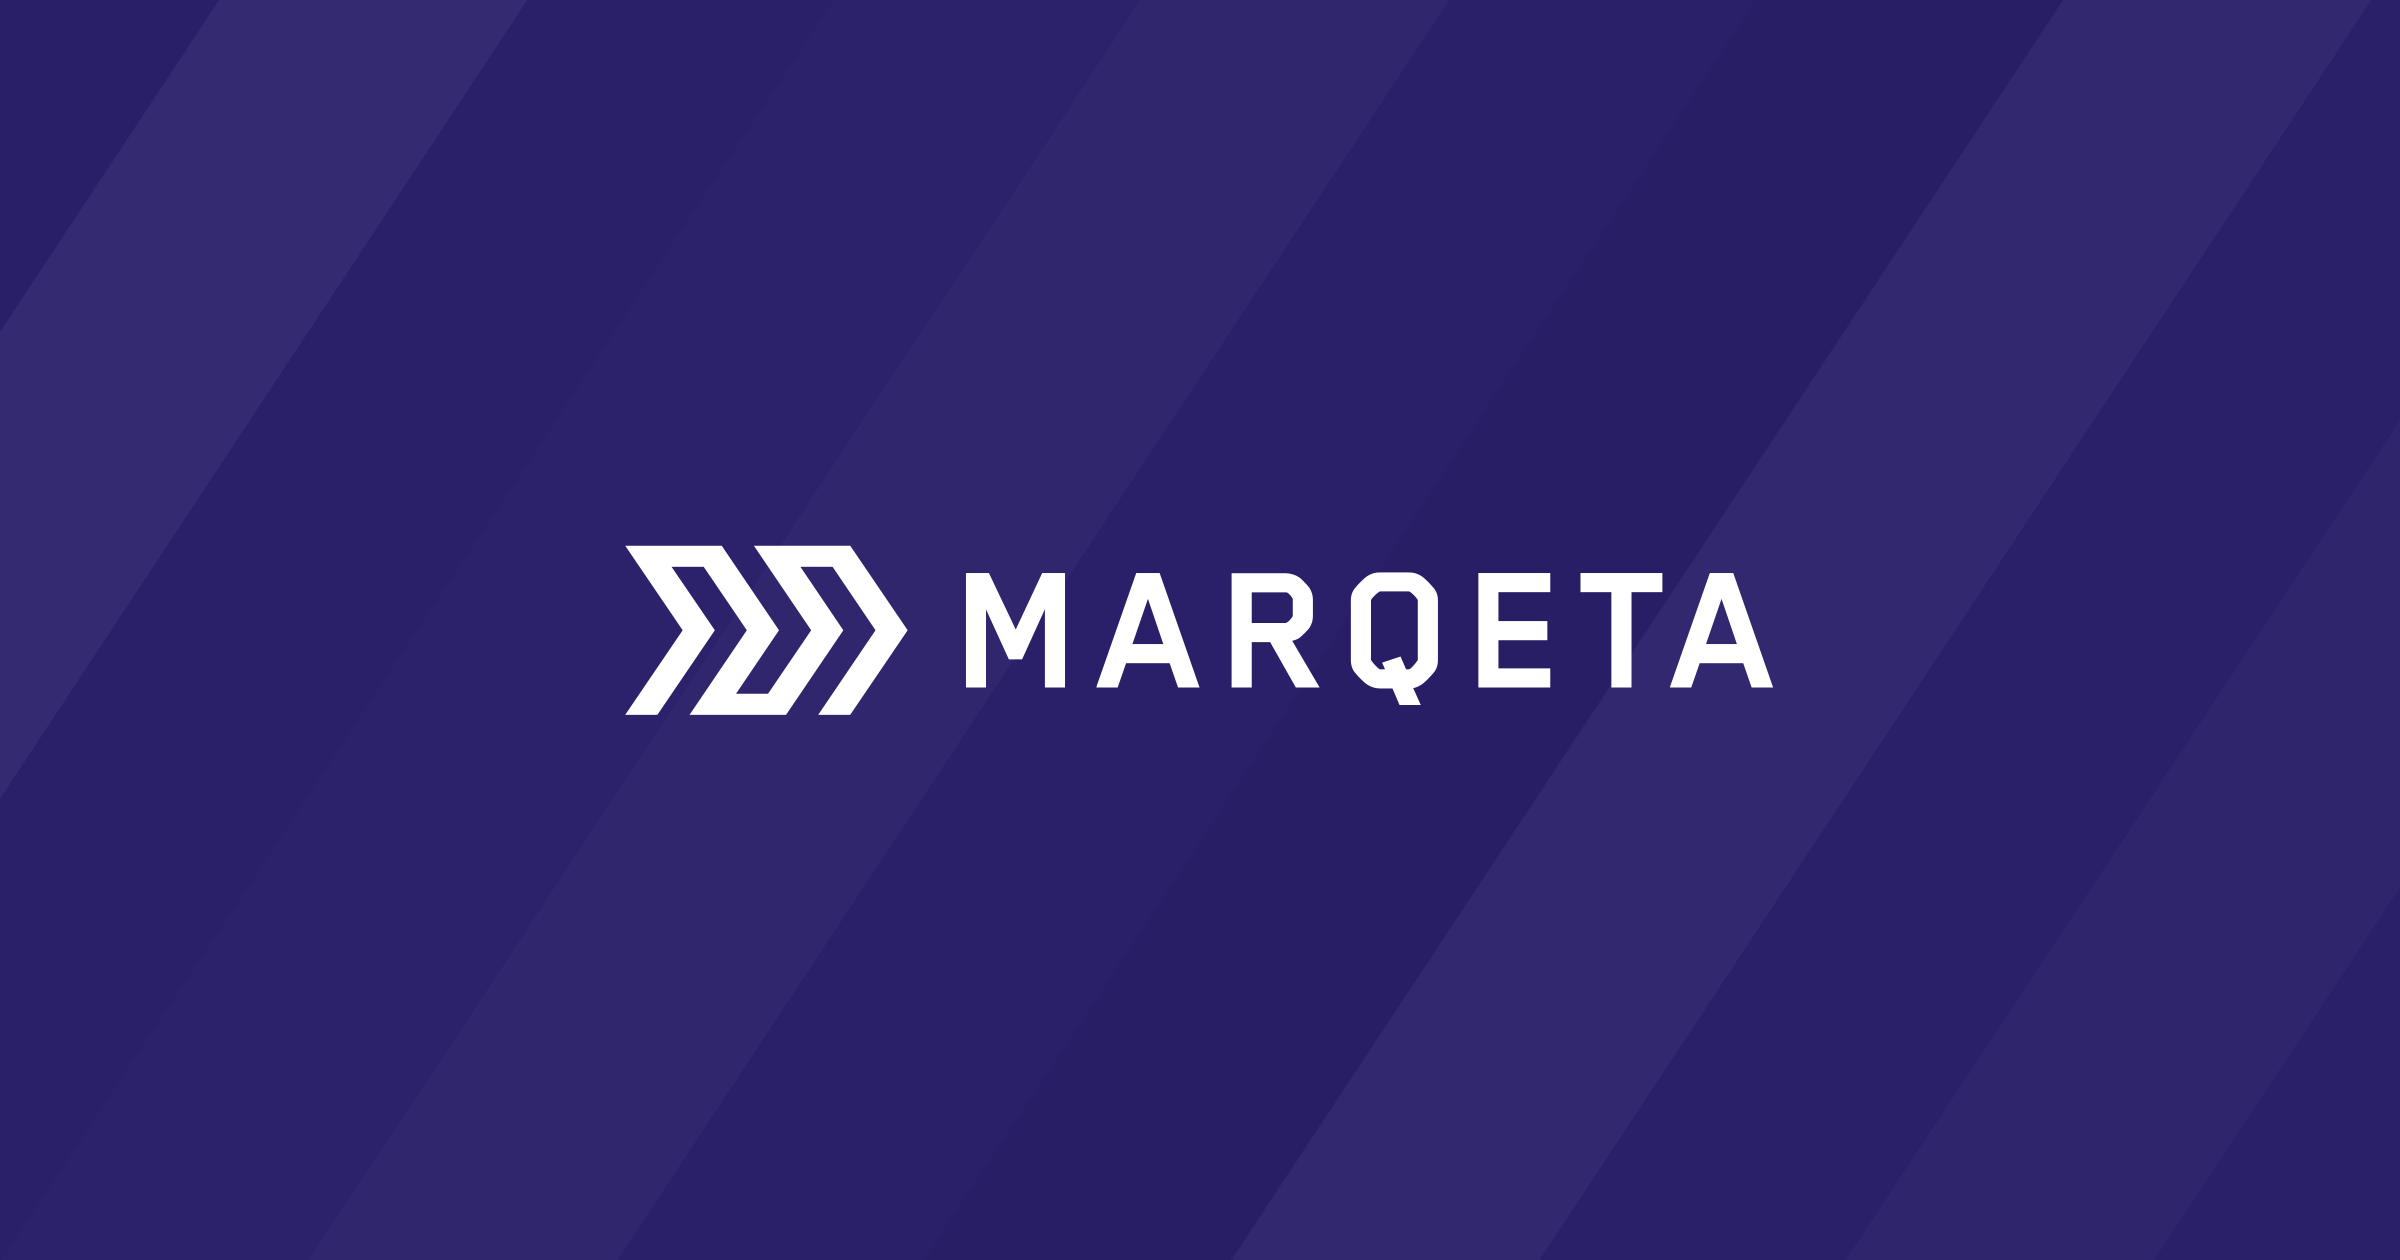 Marqeta Logo - The Modern Card Issuing Platform | Marqeta